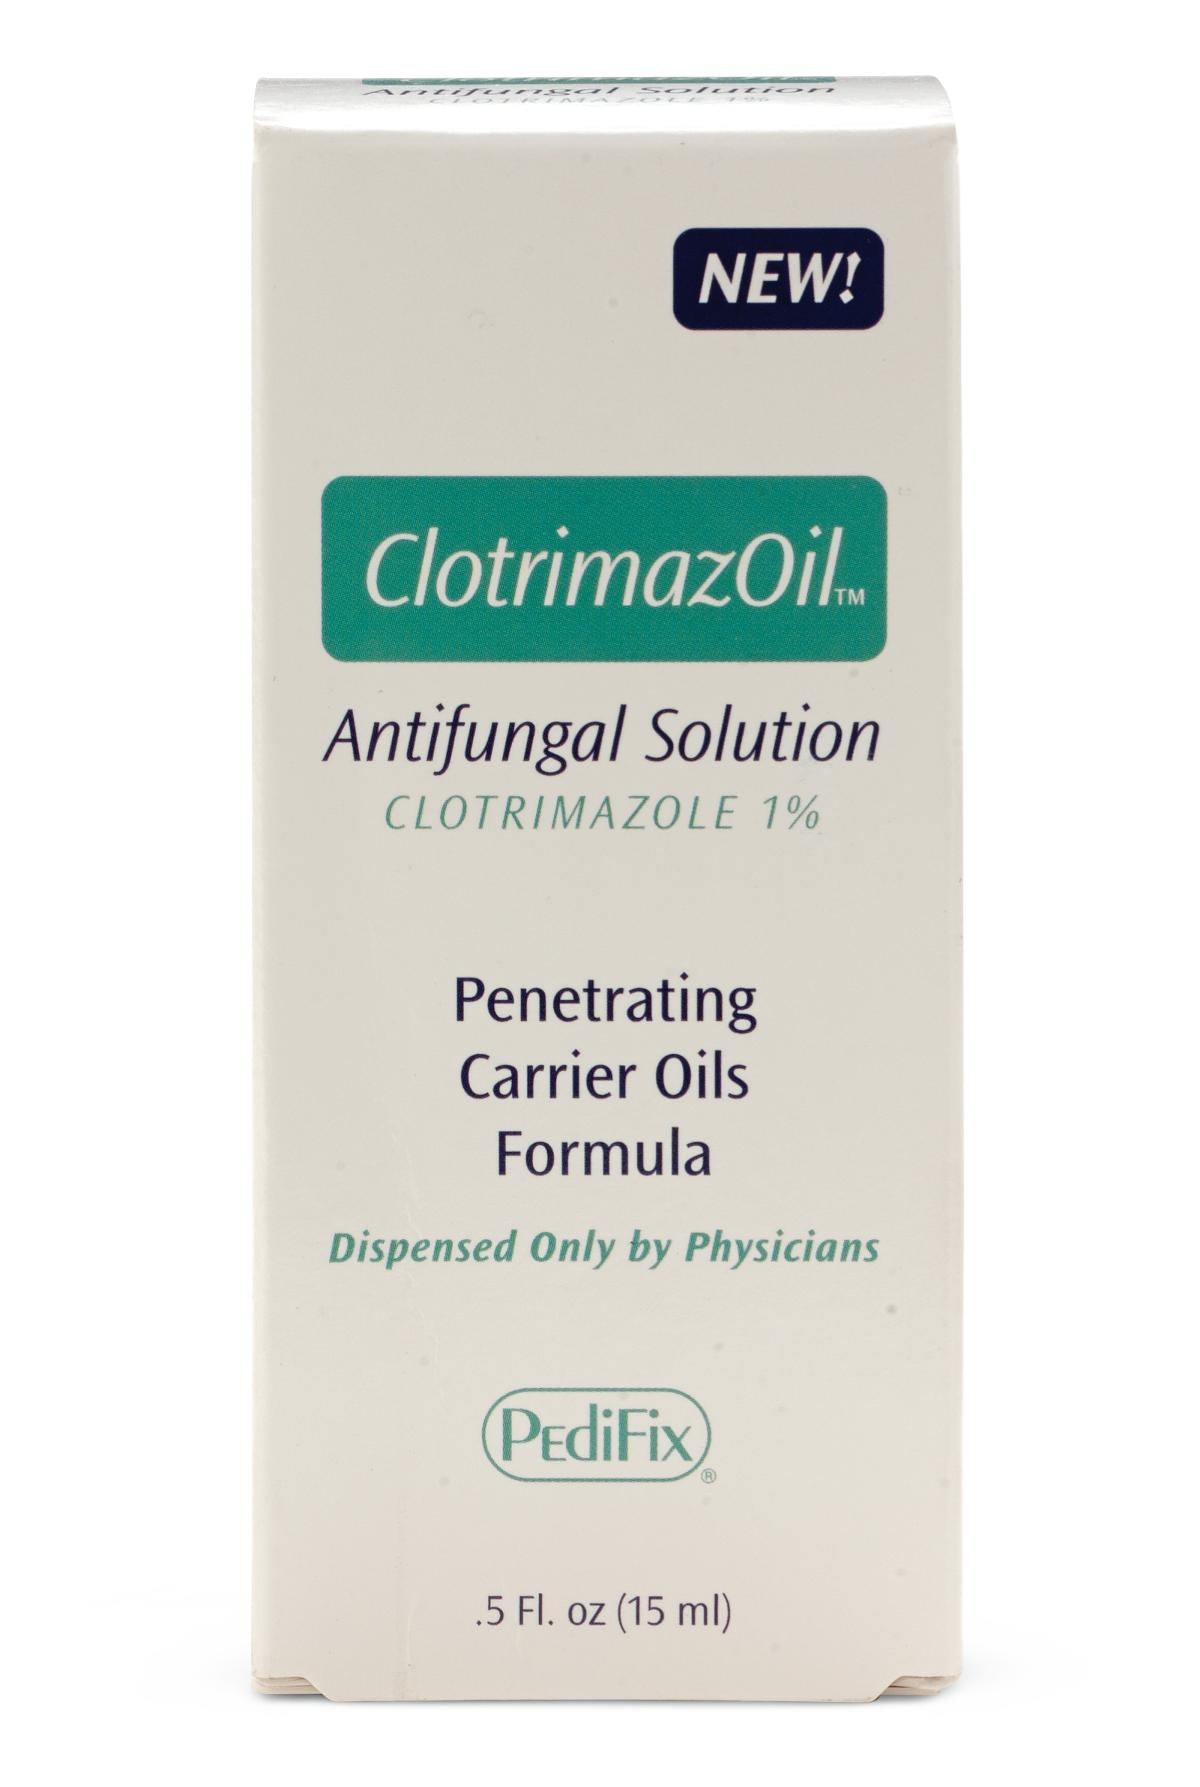 Clotrimazoil Topical Antifungal Solution